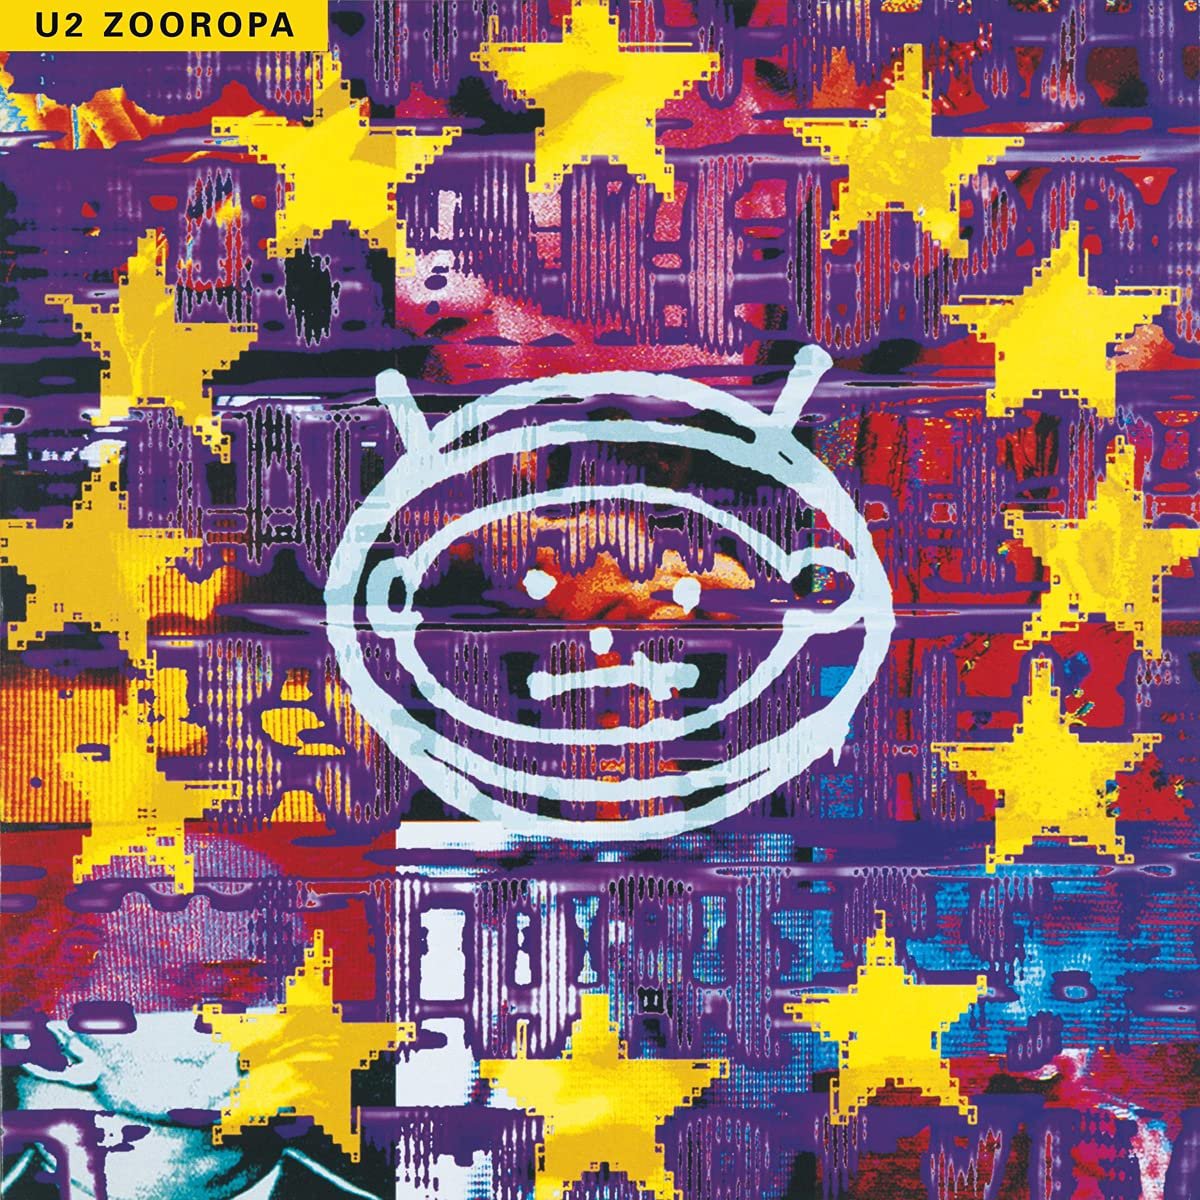 'Zooropa' - U2 